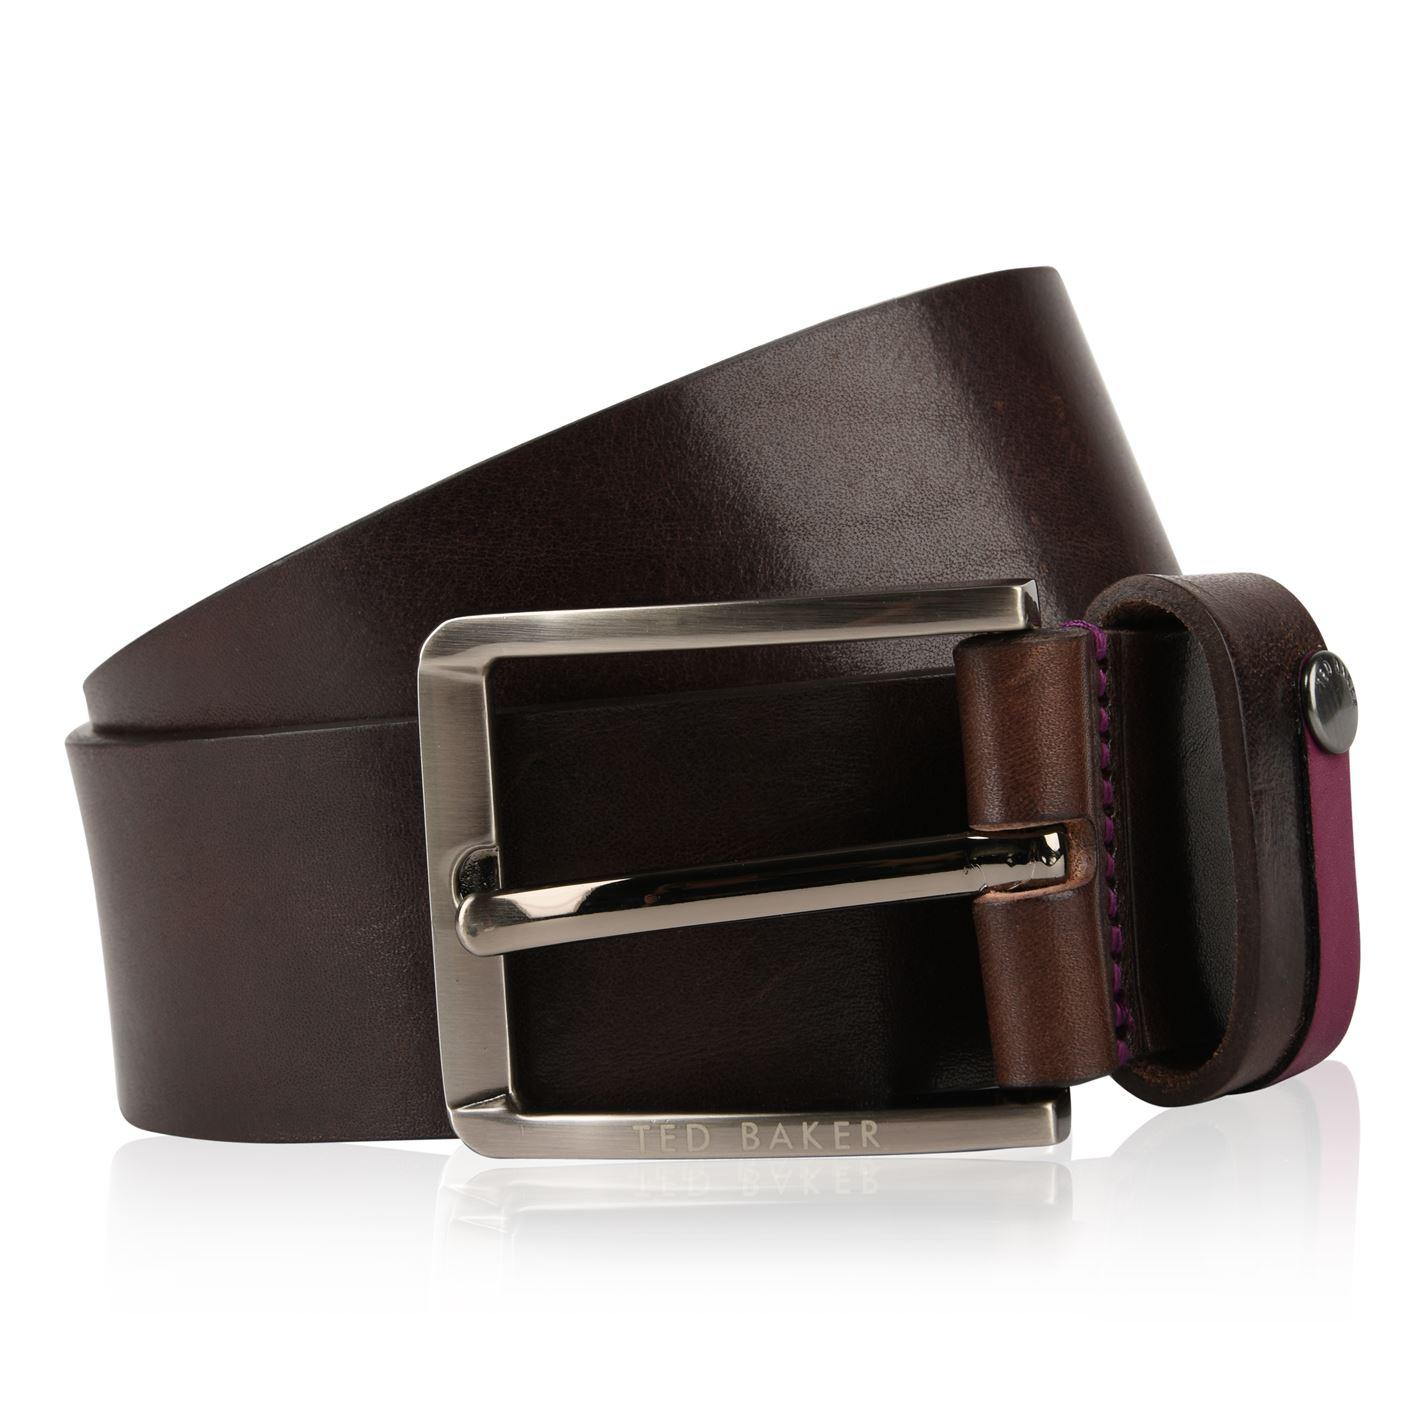 Ted Baker Contrast Leather Belt in Brown for Men - Lyst